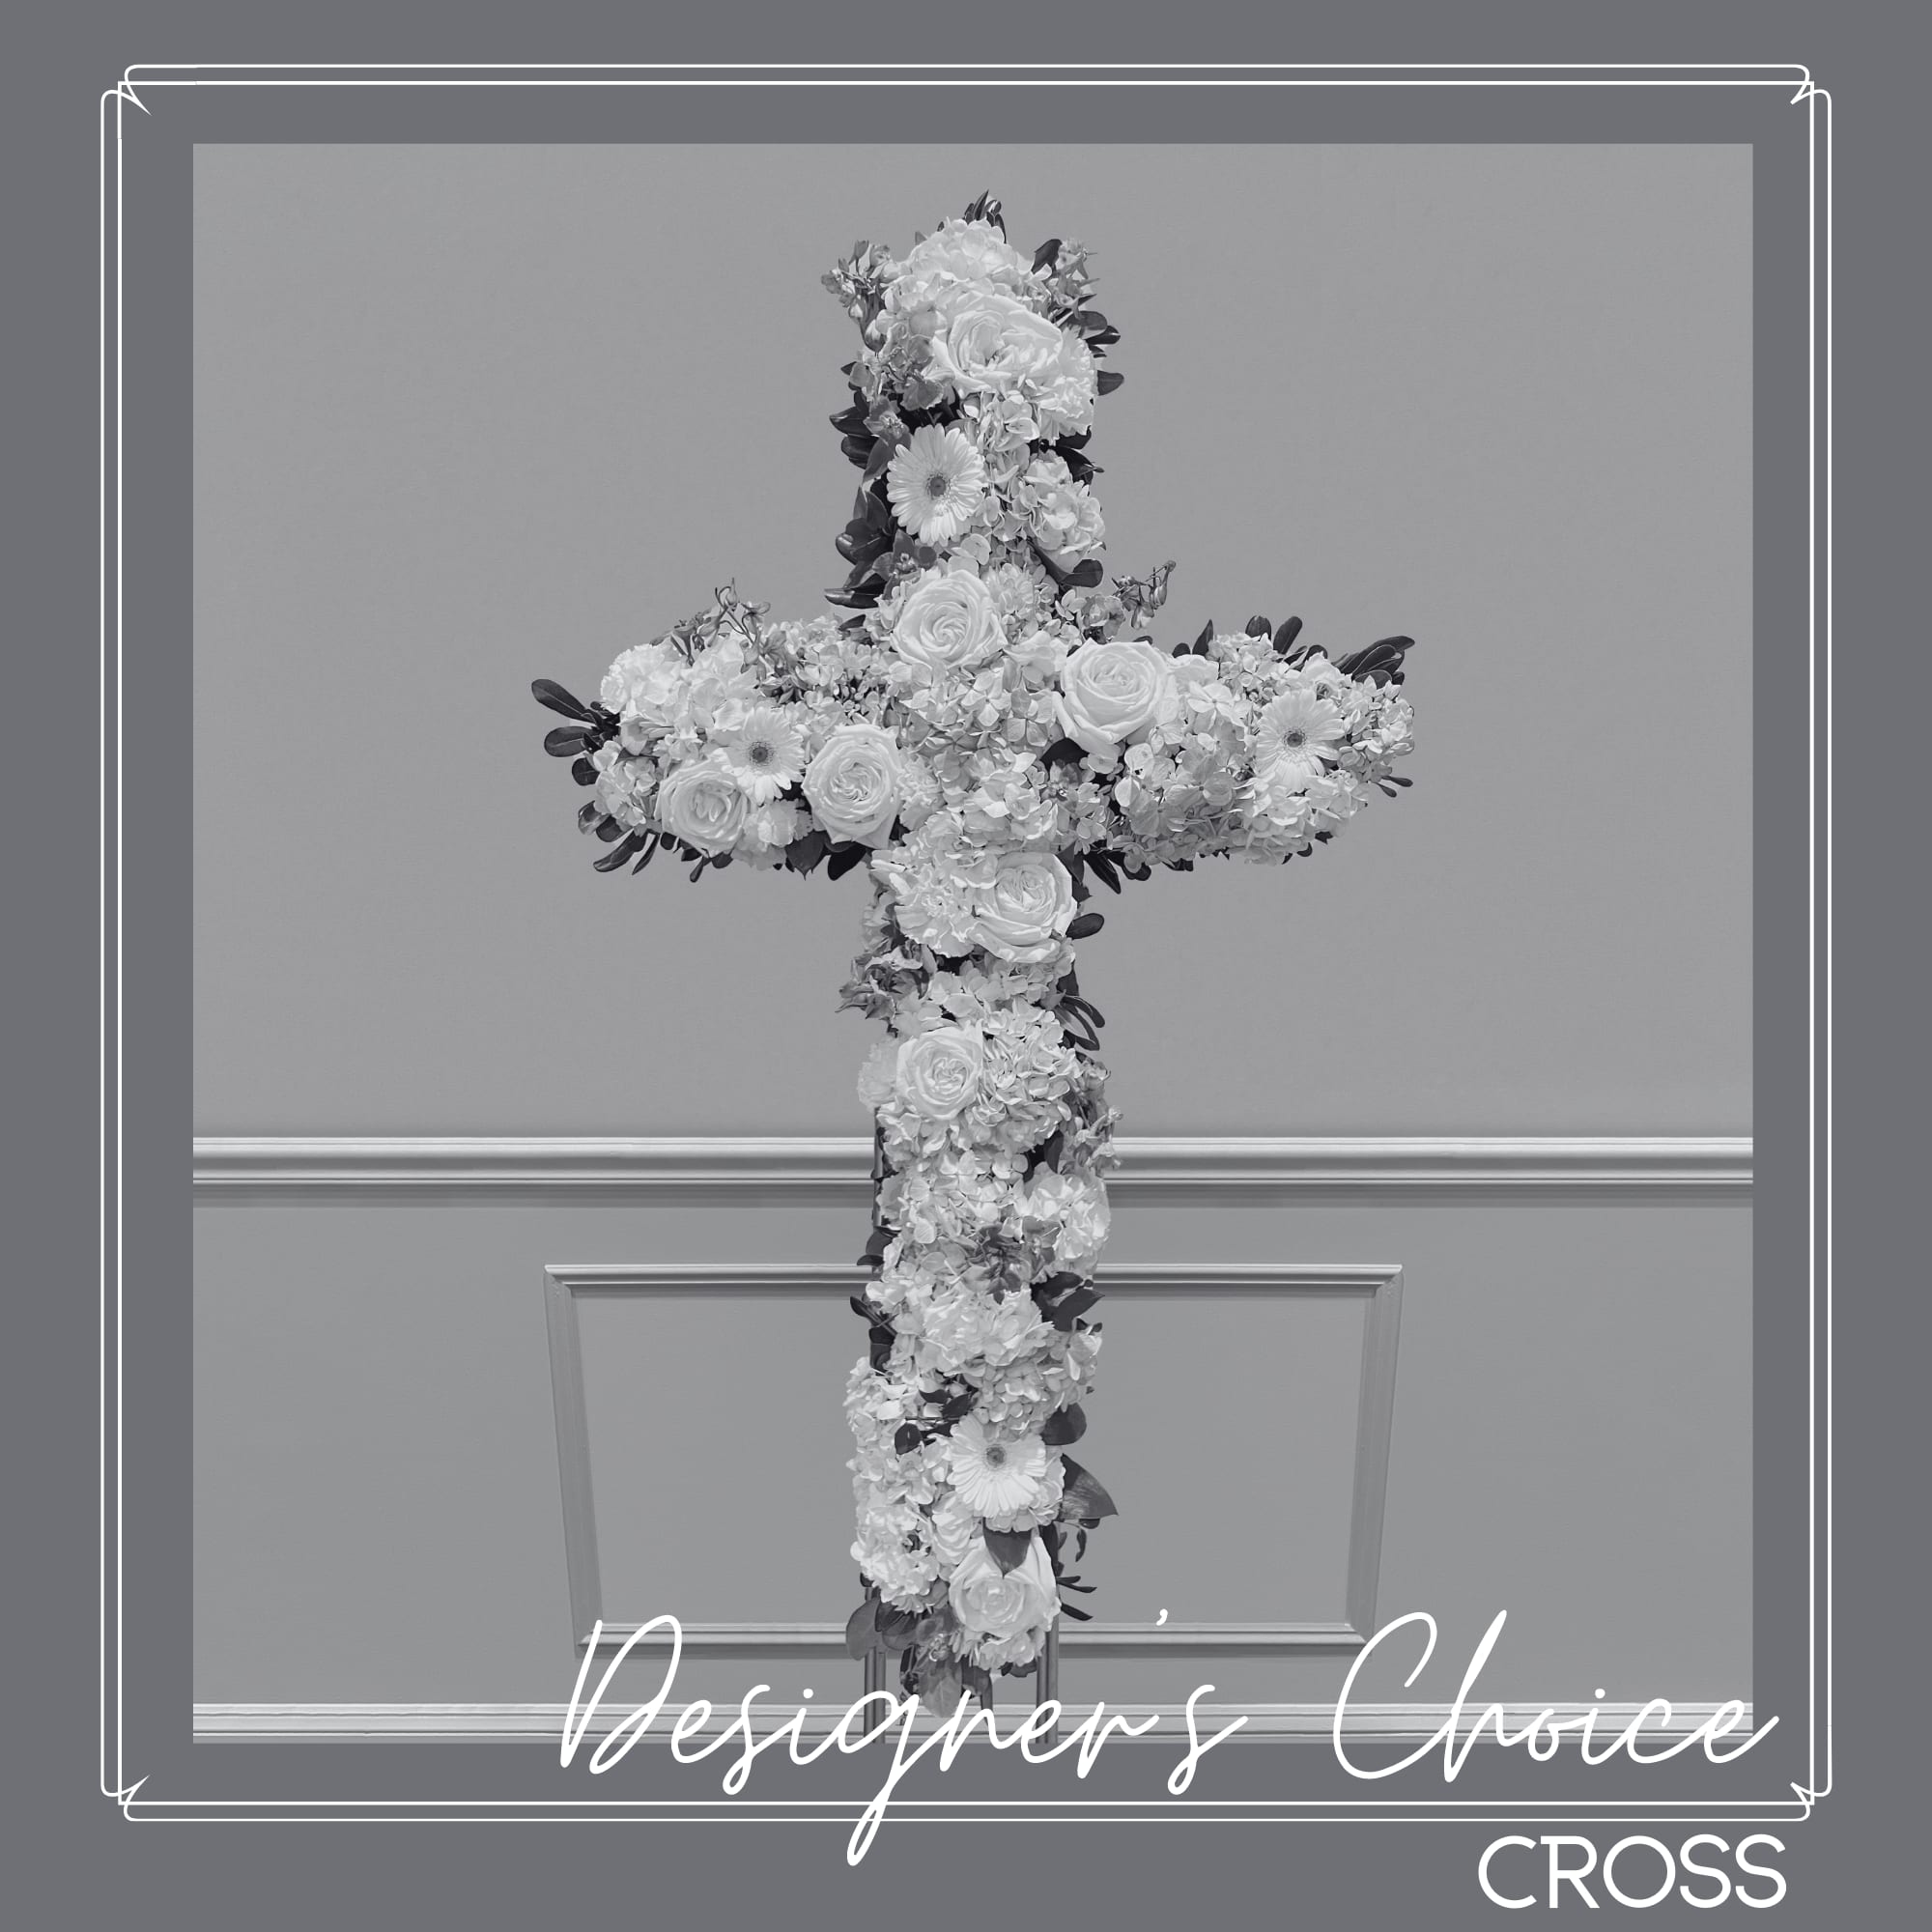 Premium Floral Funeral Cross for Memorial or Service